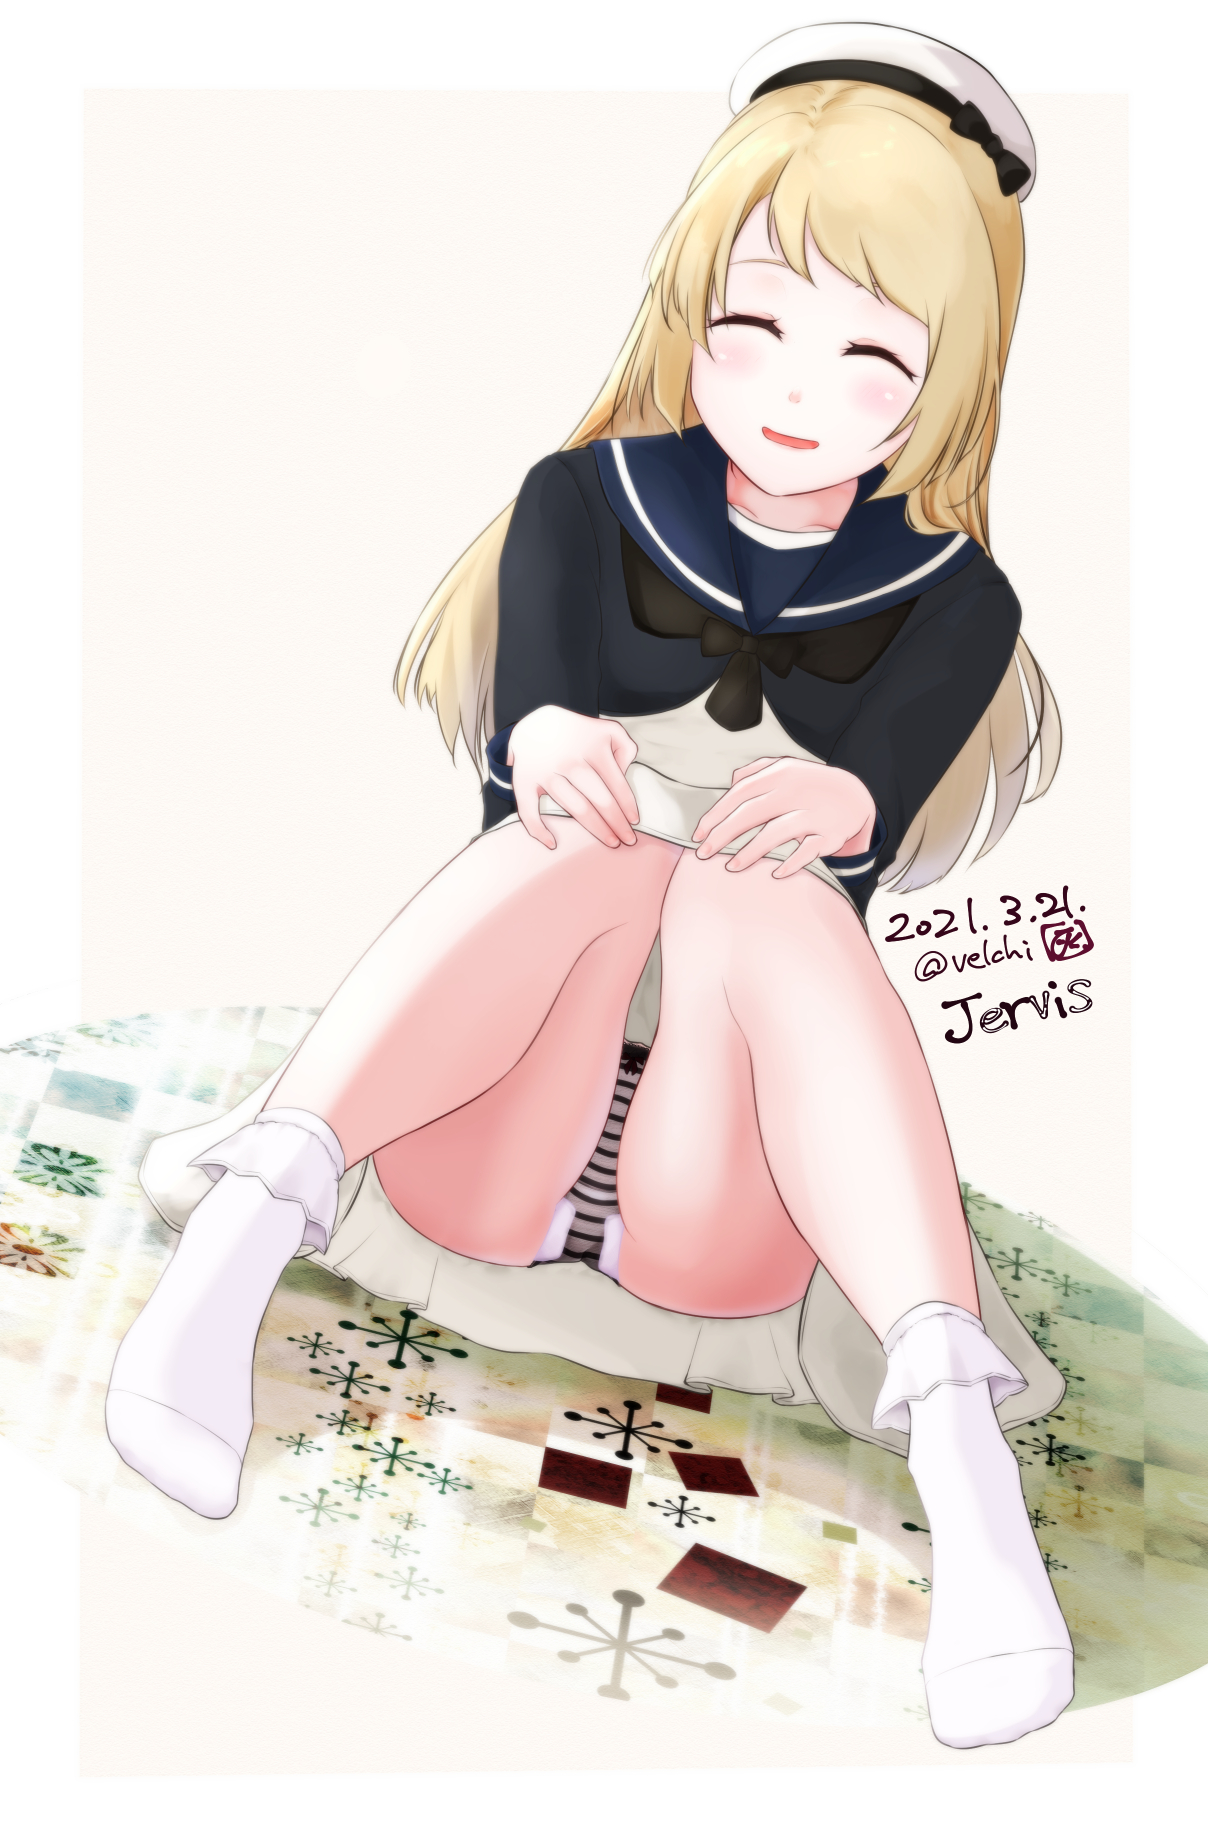 Anime 1208x1844 anime anime girls Kantai Collection Jervis (KanColle) long hair blonde solo artwork digital art fan art panties